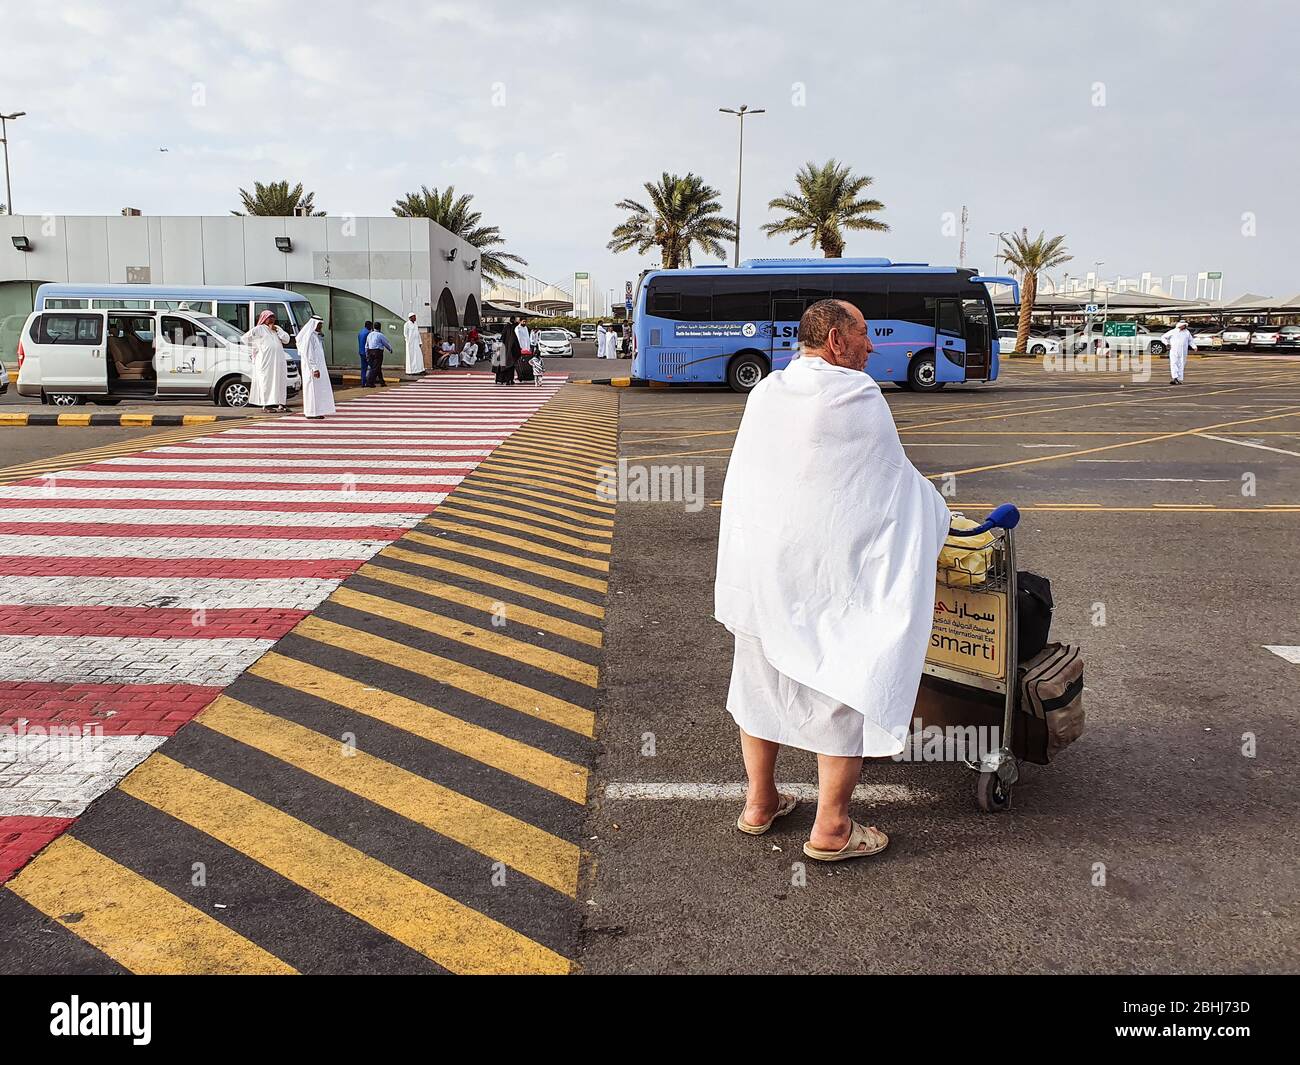 Jeddah / Saudi Arabia - January 16, 2020: Muslim man pushing lugage while wearing white clothes similar to towels outside Jeddah airport Stock Photo